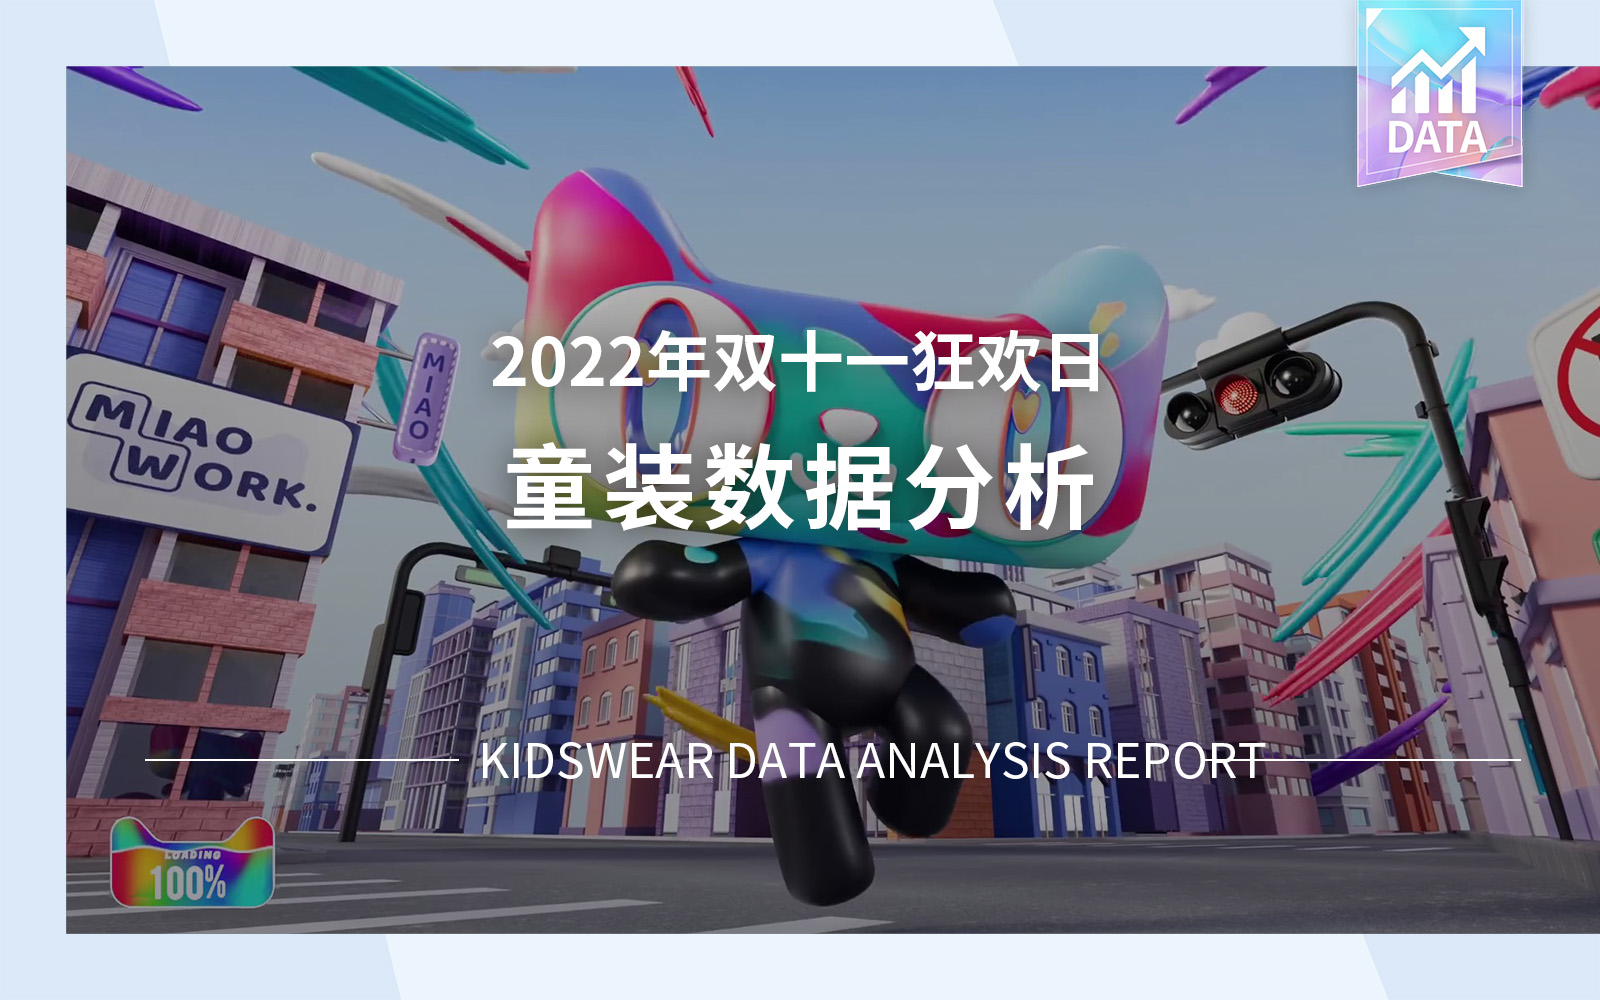 2022 Double 11 Shopping Festival Data Analysis of Kidswear